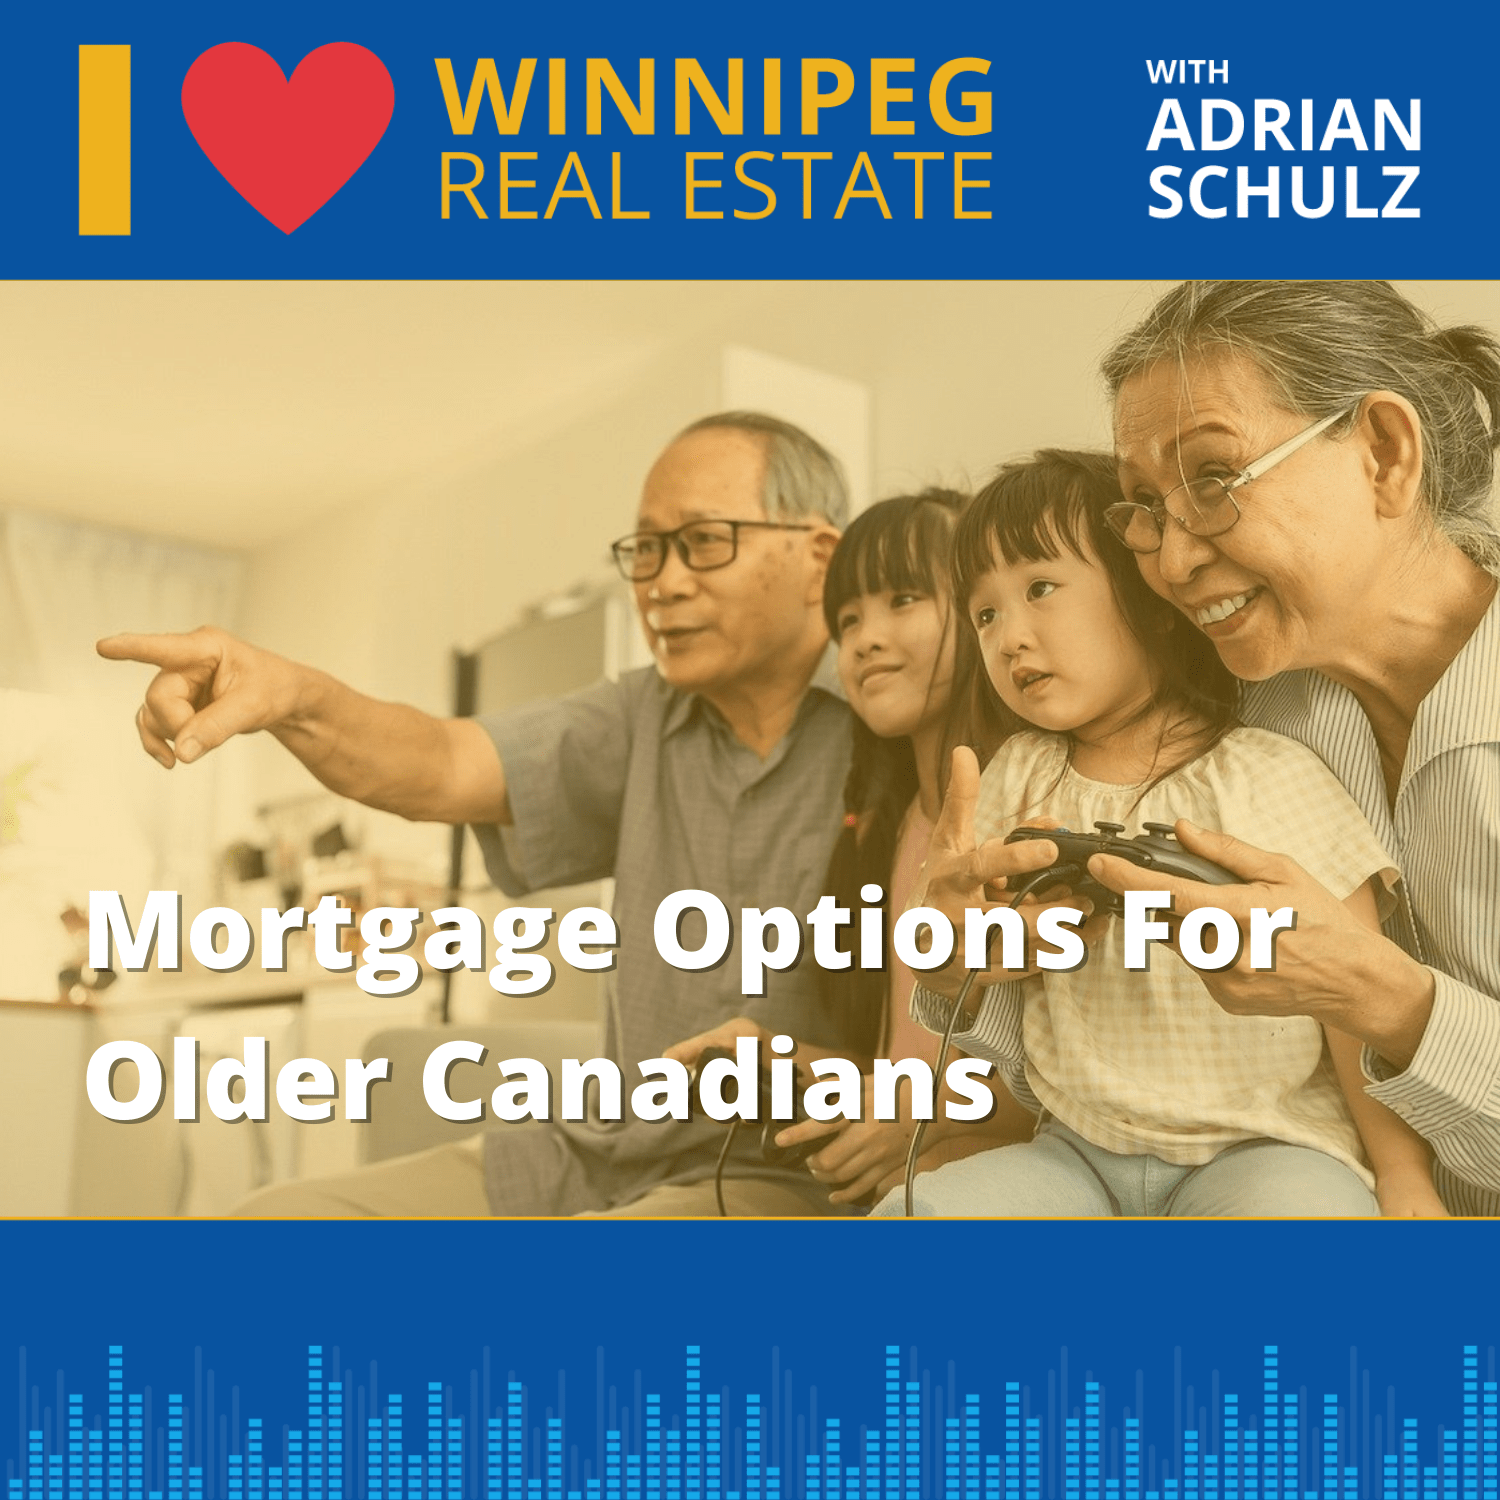 Mortgage Options for Older Canadians Image